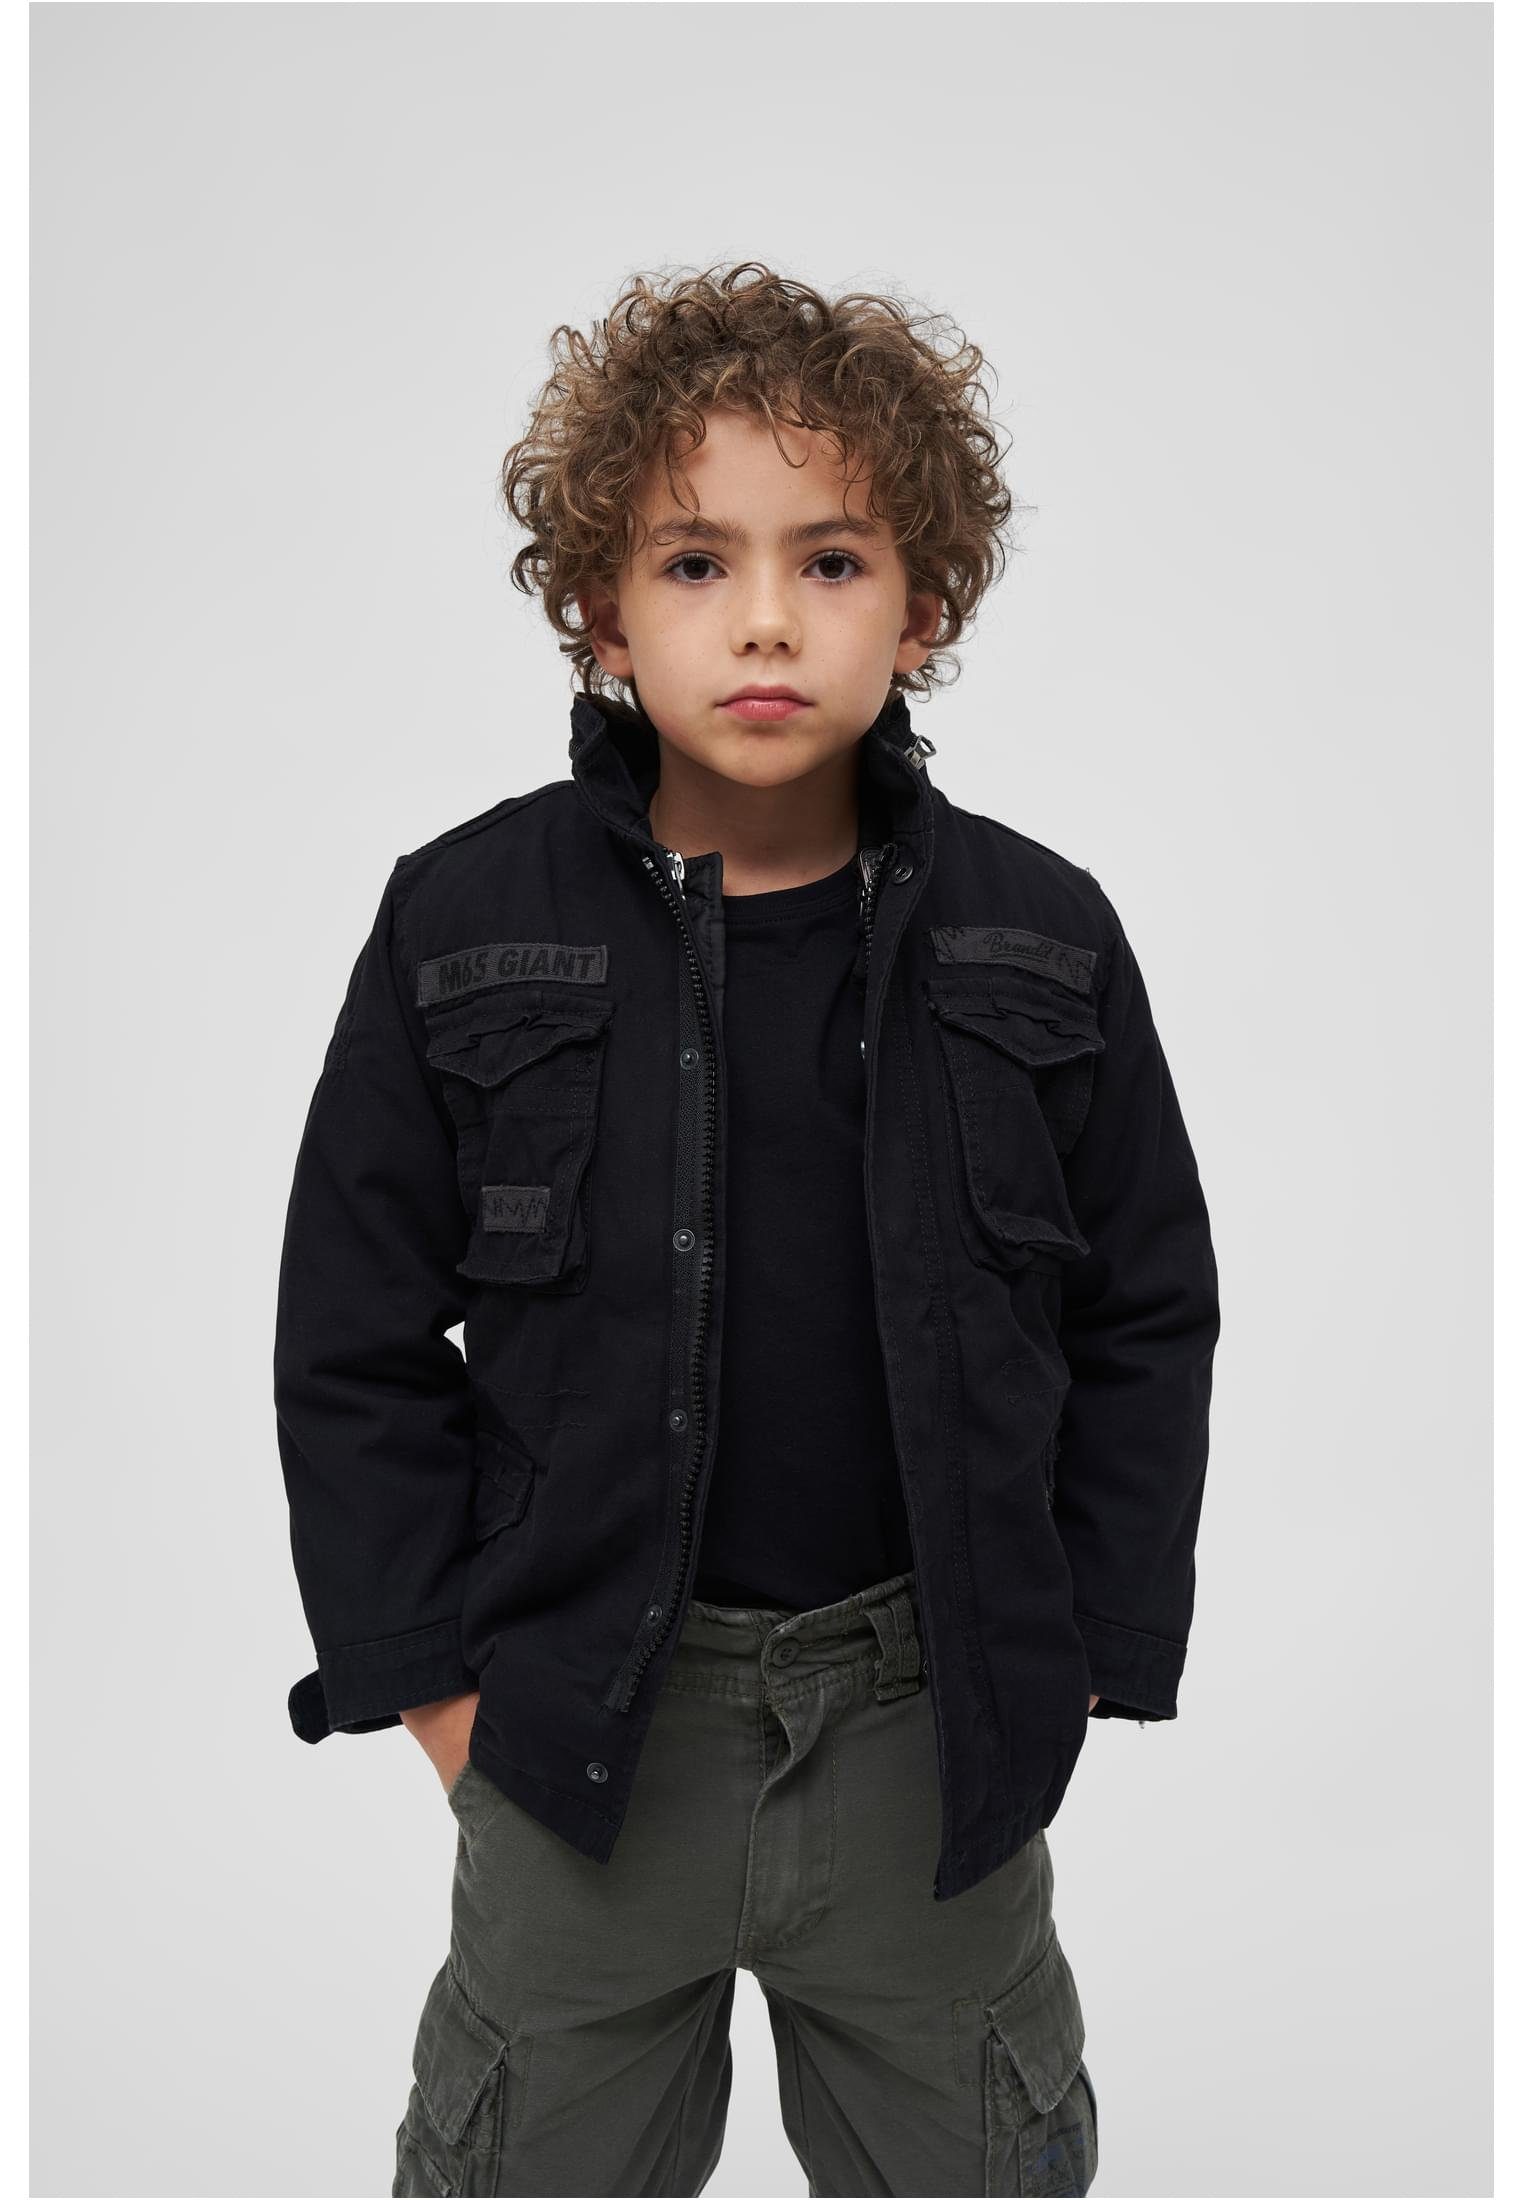 [Beliebtes Qualitätsprodukt!] Brandit Parka (1-St) Jacket Kids Herren black Giant M65